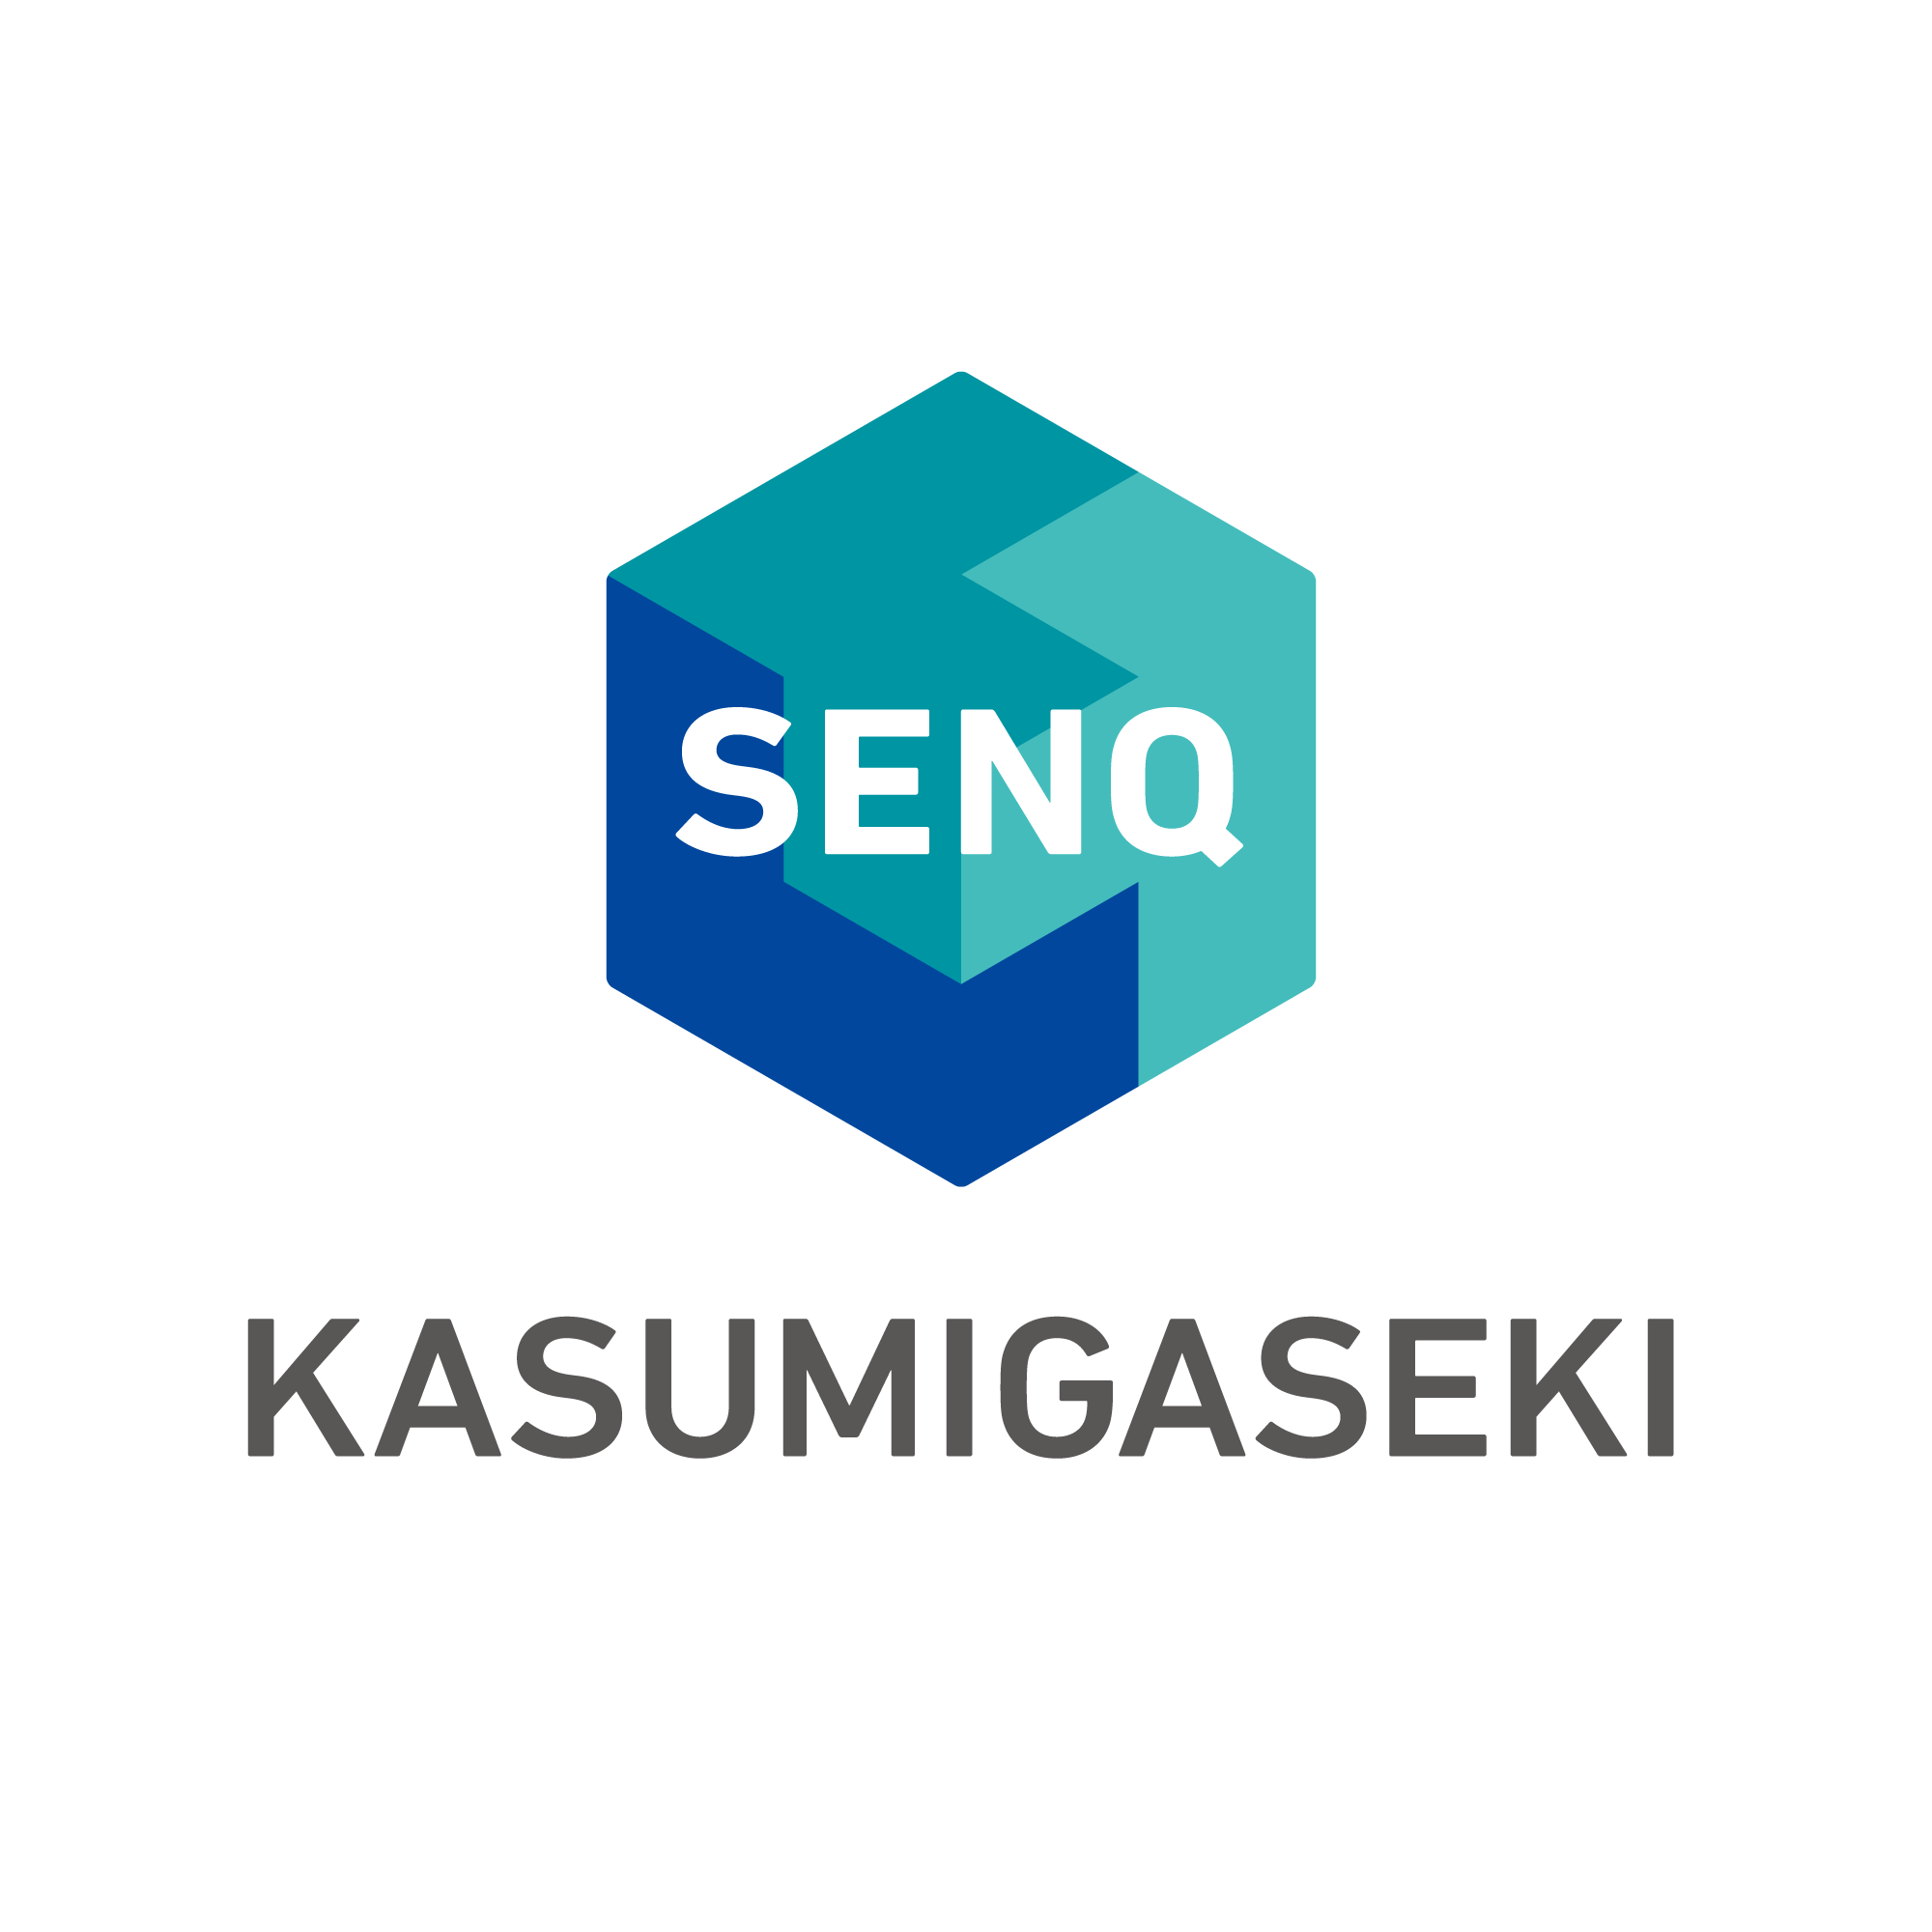 10_SENQ_brandlogo_KASUMIGASEKI_lockup_vertical-1